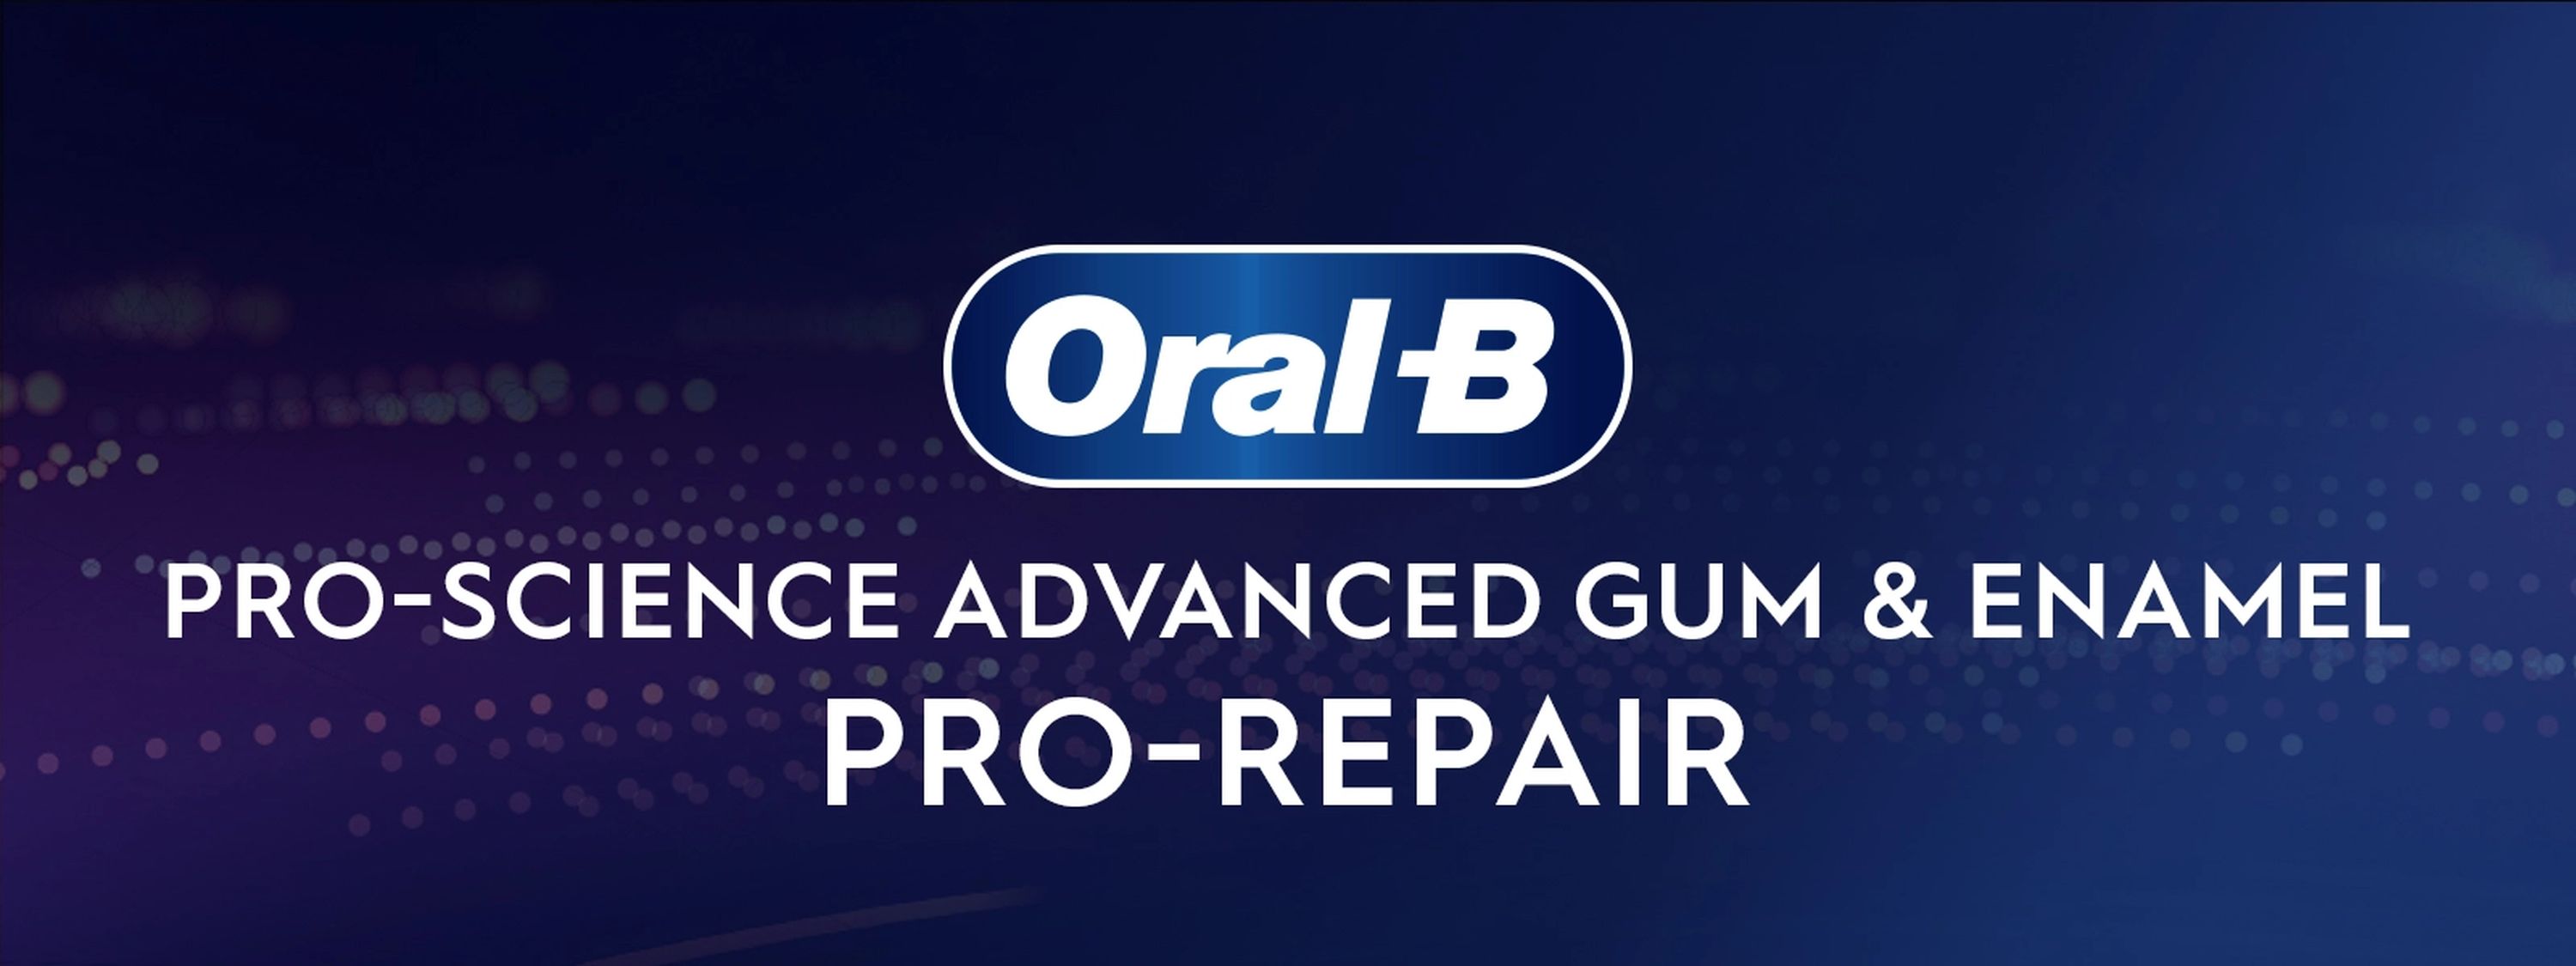 Pro science advanced gum and enamel pro repair.